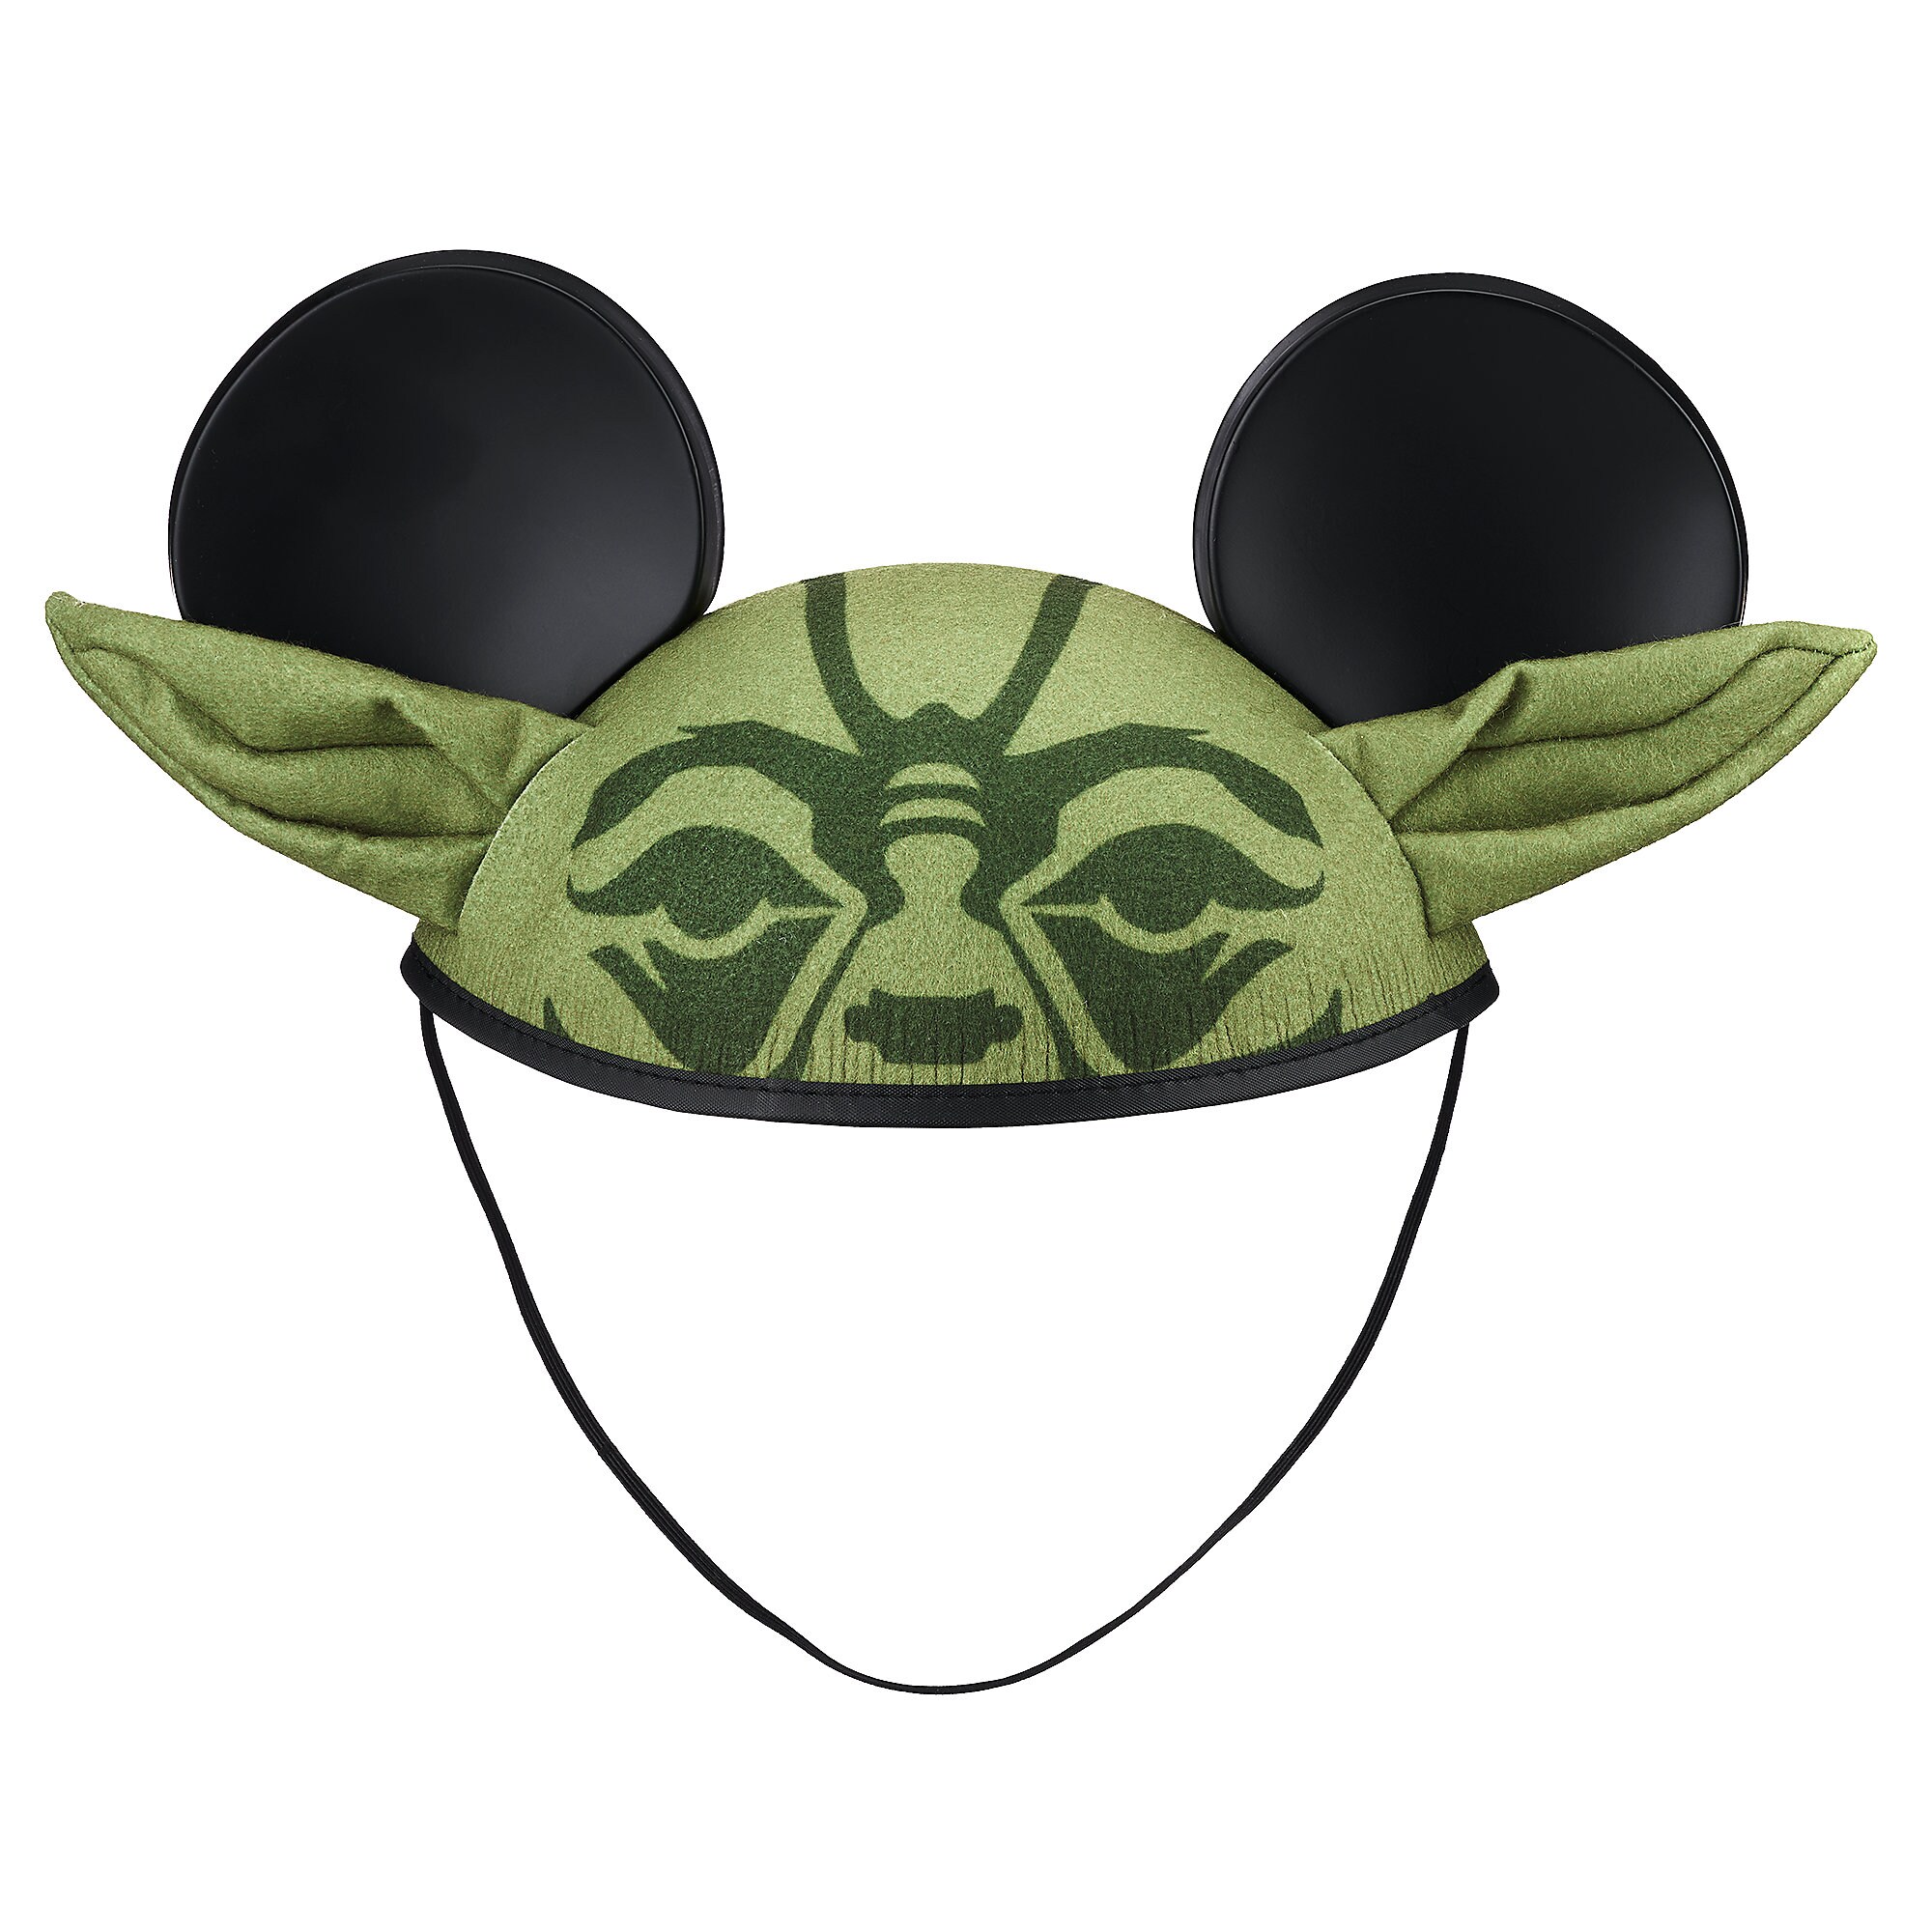 Yoda Ear Hat for Adults - Star Wars